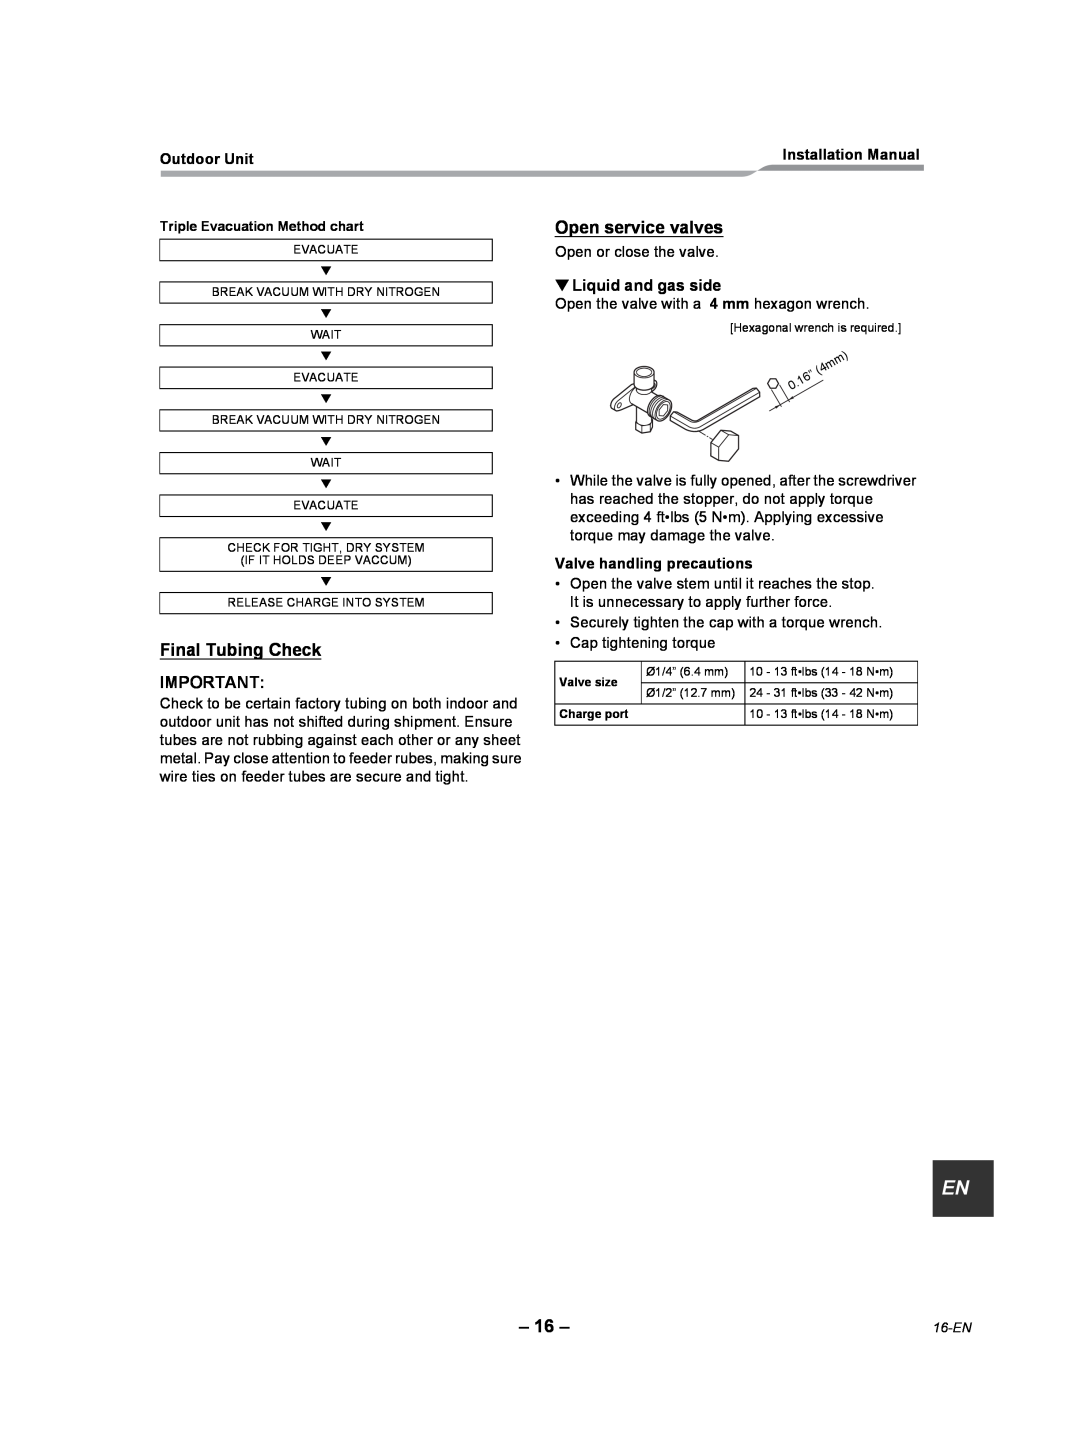 Toshiba RAV-SP180AT2-UL installation manual Final Tubing Check, Open service valves 